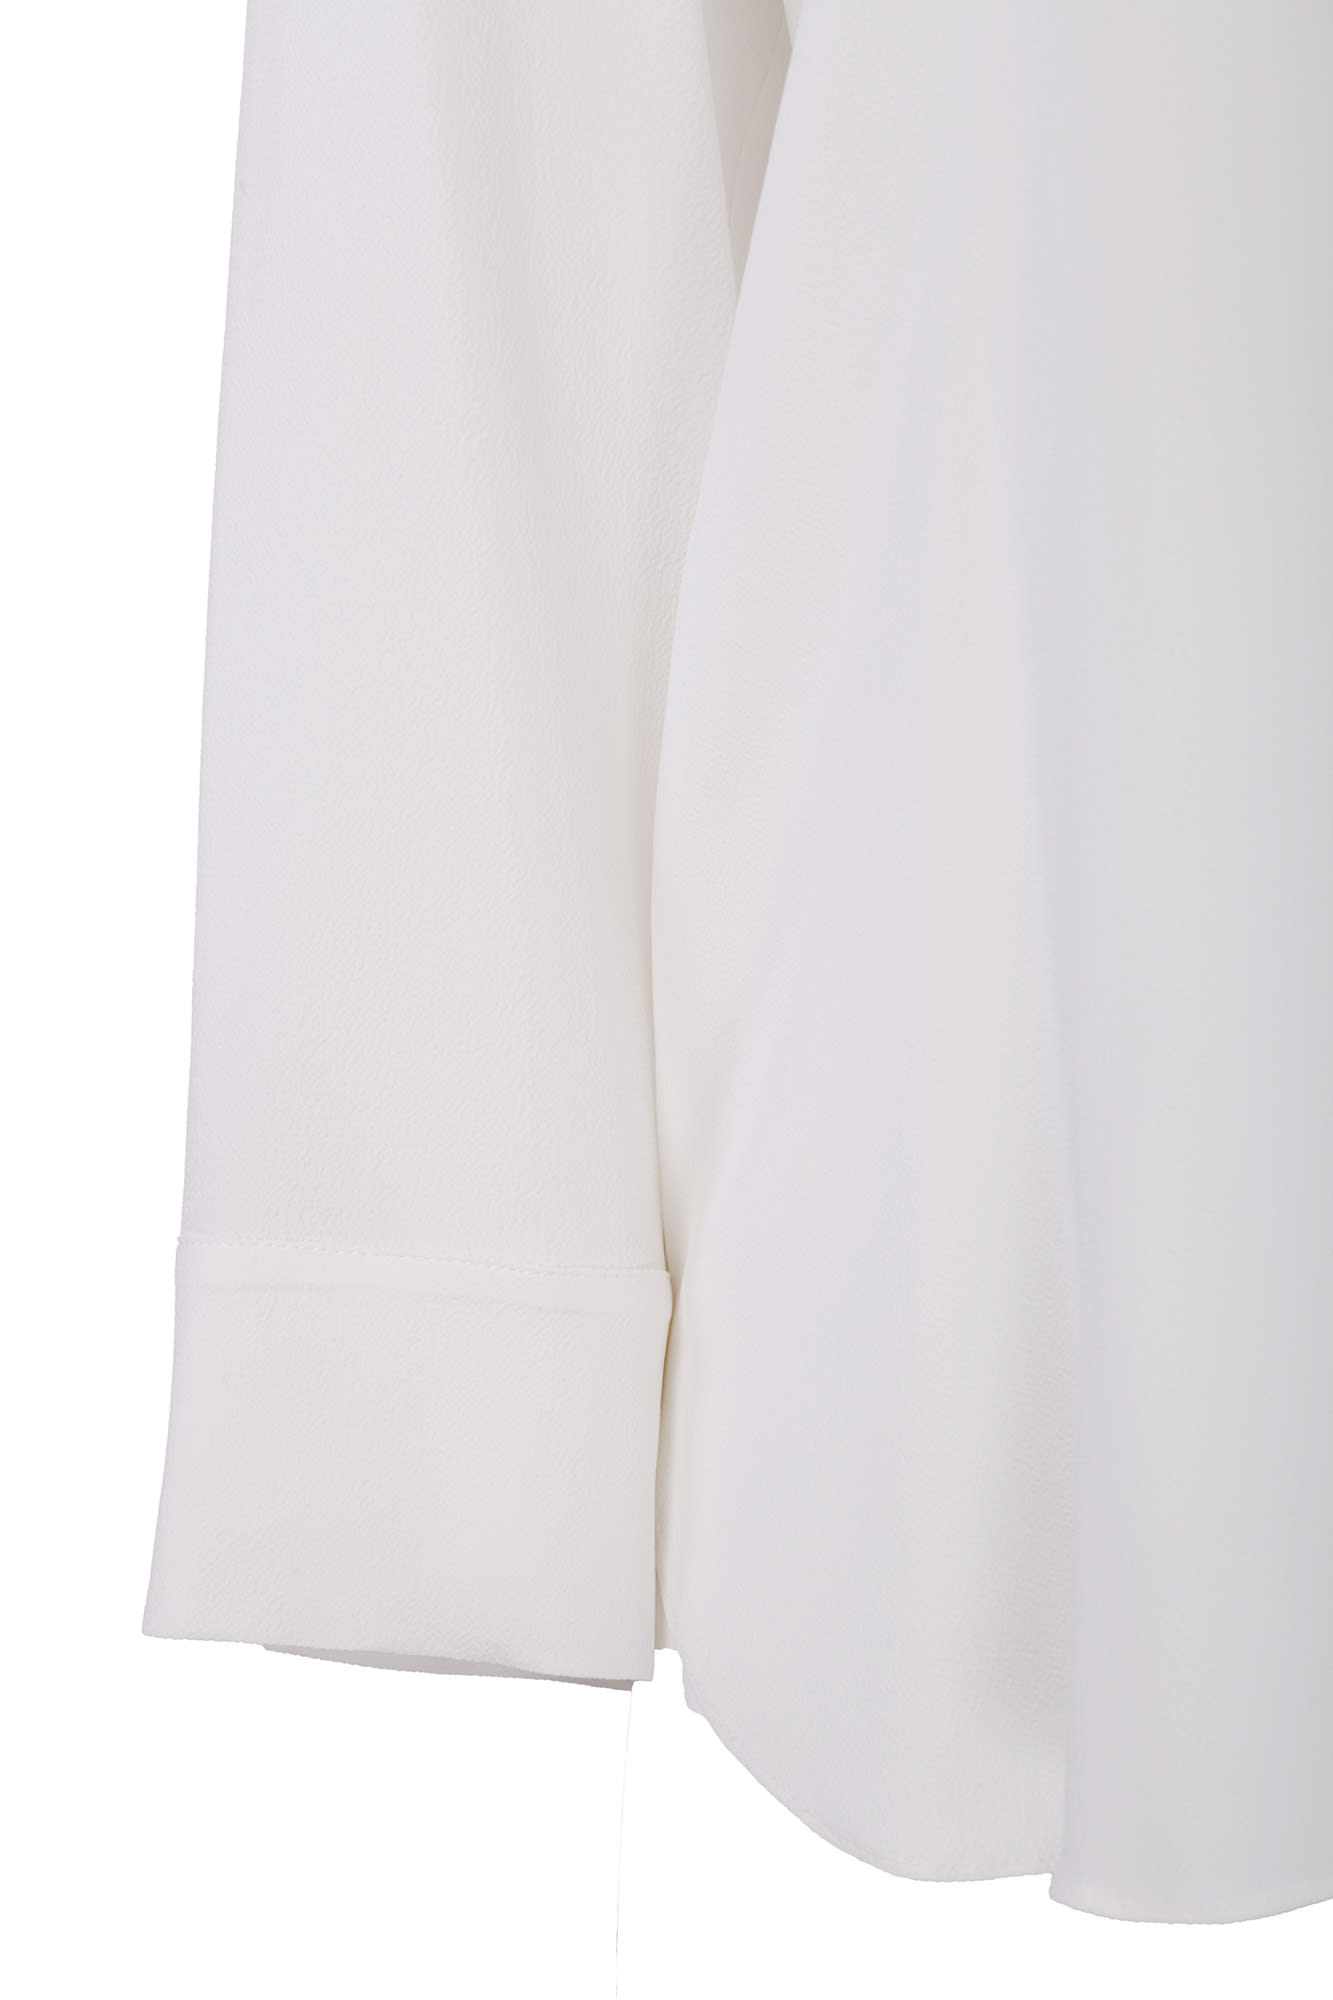 Shop Antonelli Firenze Shirts White